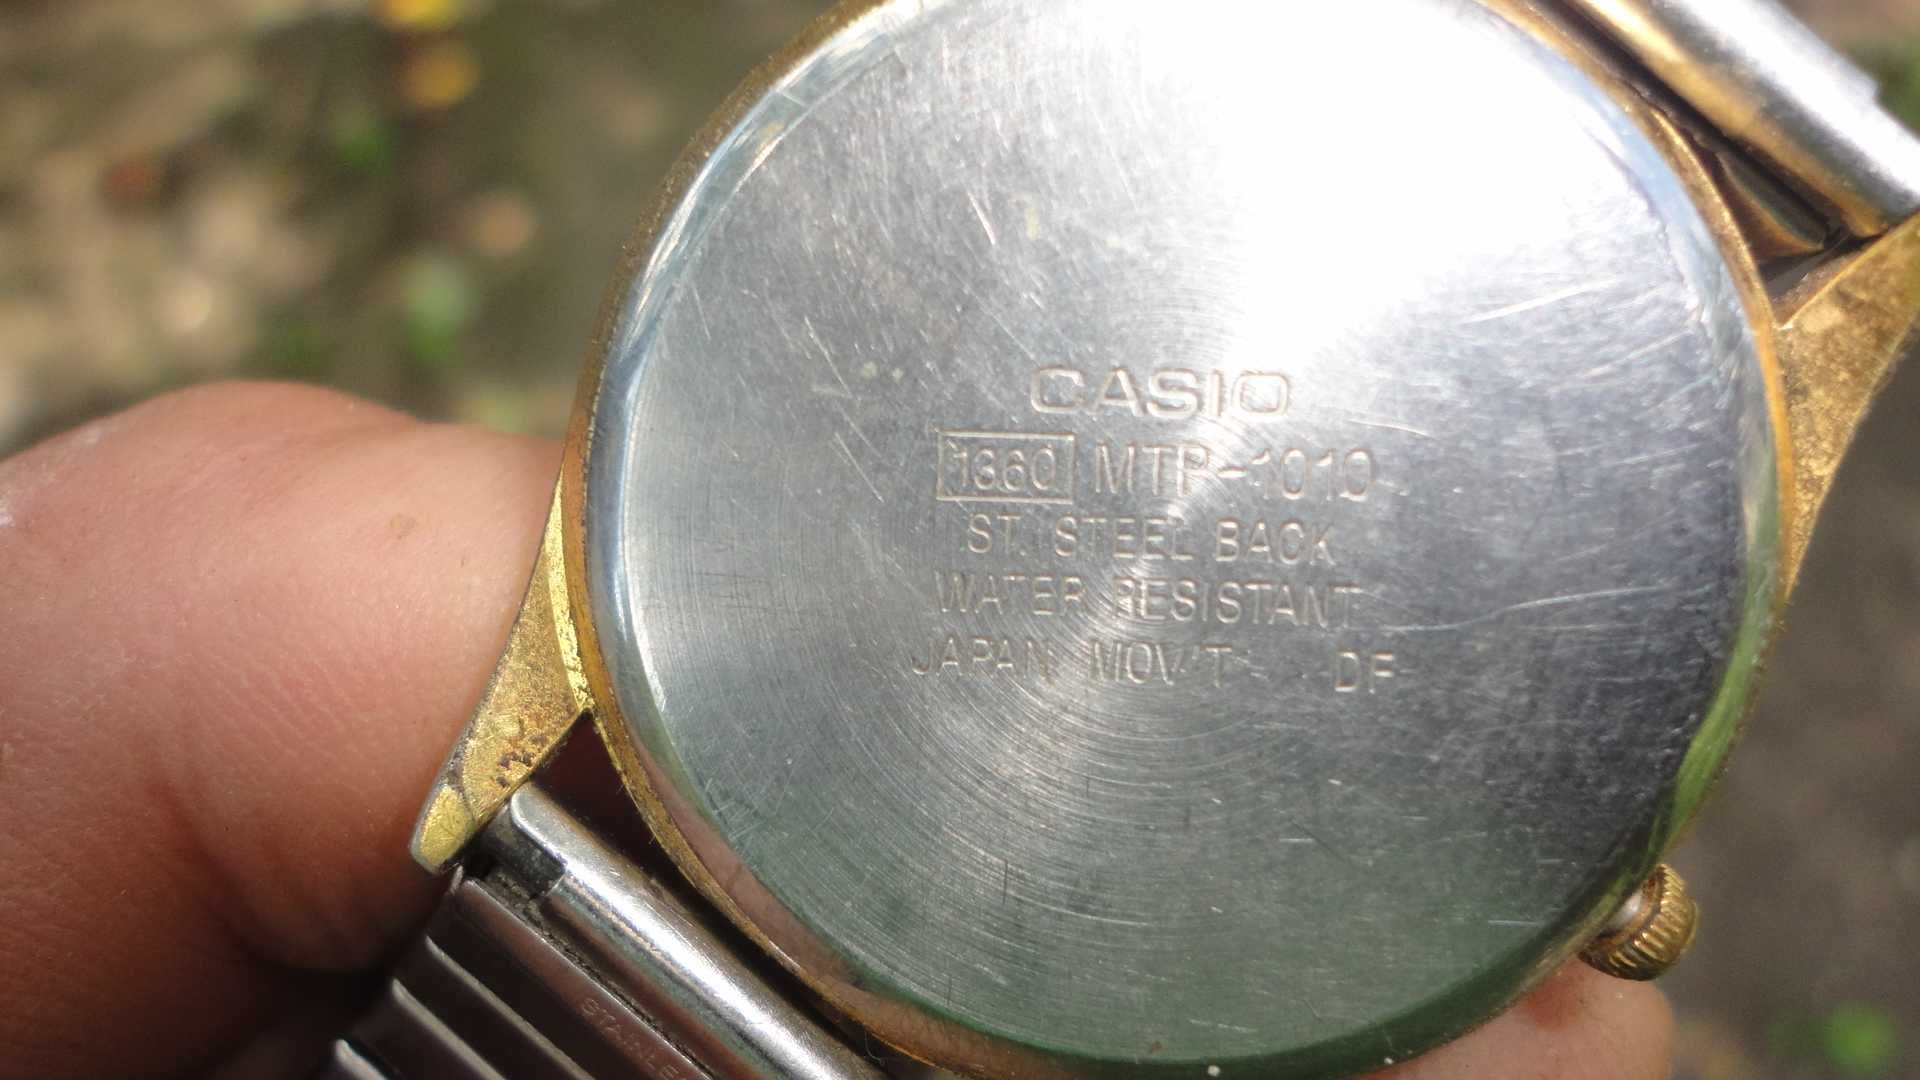 Casio Men's Watch MTP-1010